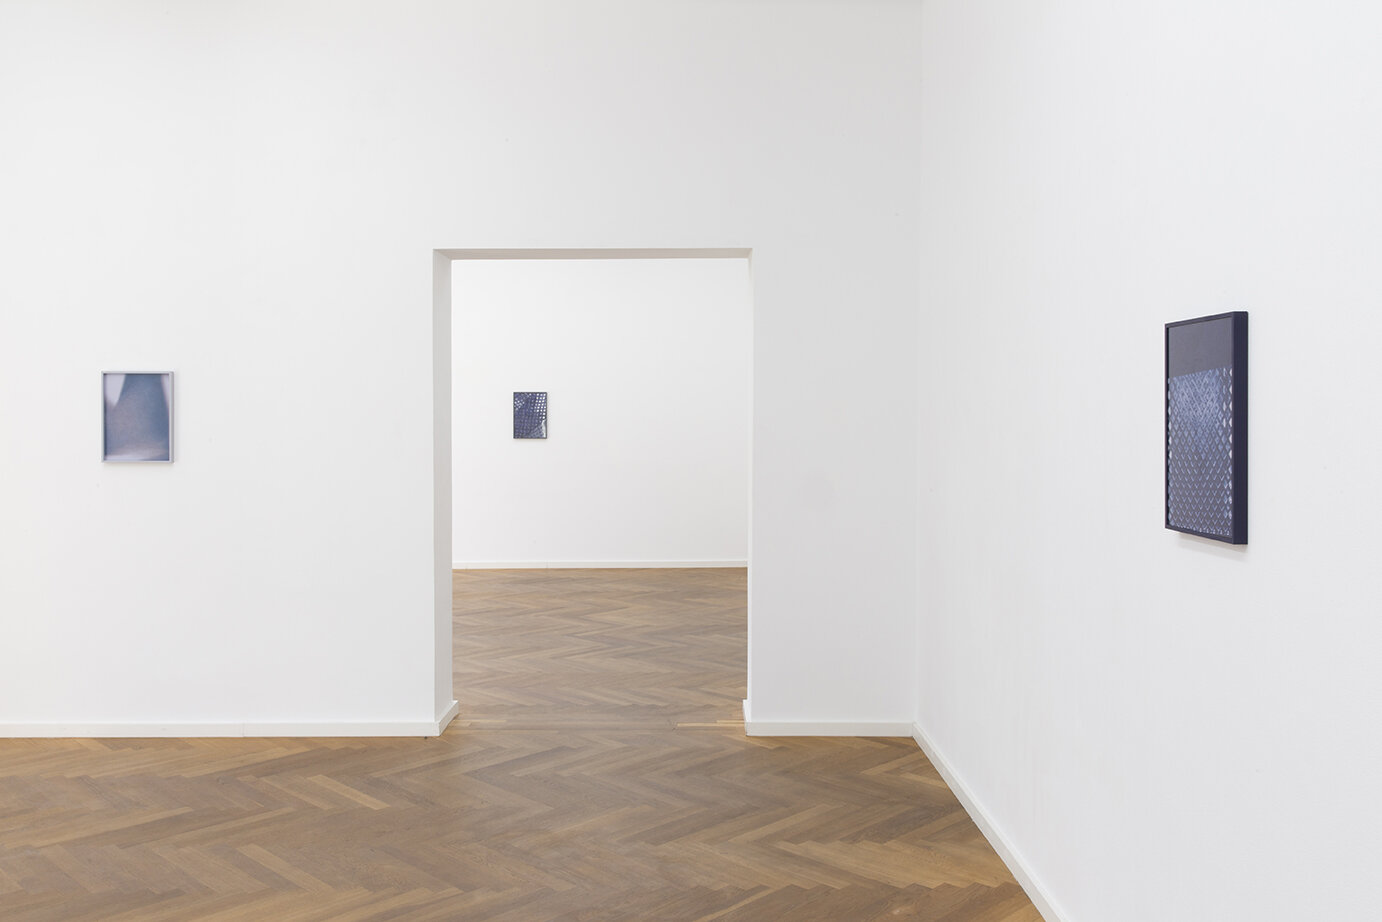  Marcus Gundling: “As I Please”, 2020, Exhibition views, Galerie Parisa Kind, Frankfurt am Main 